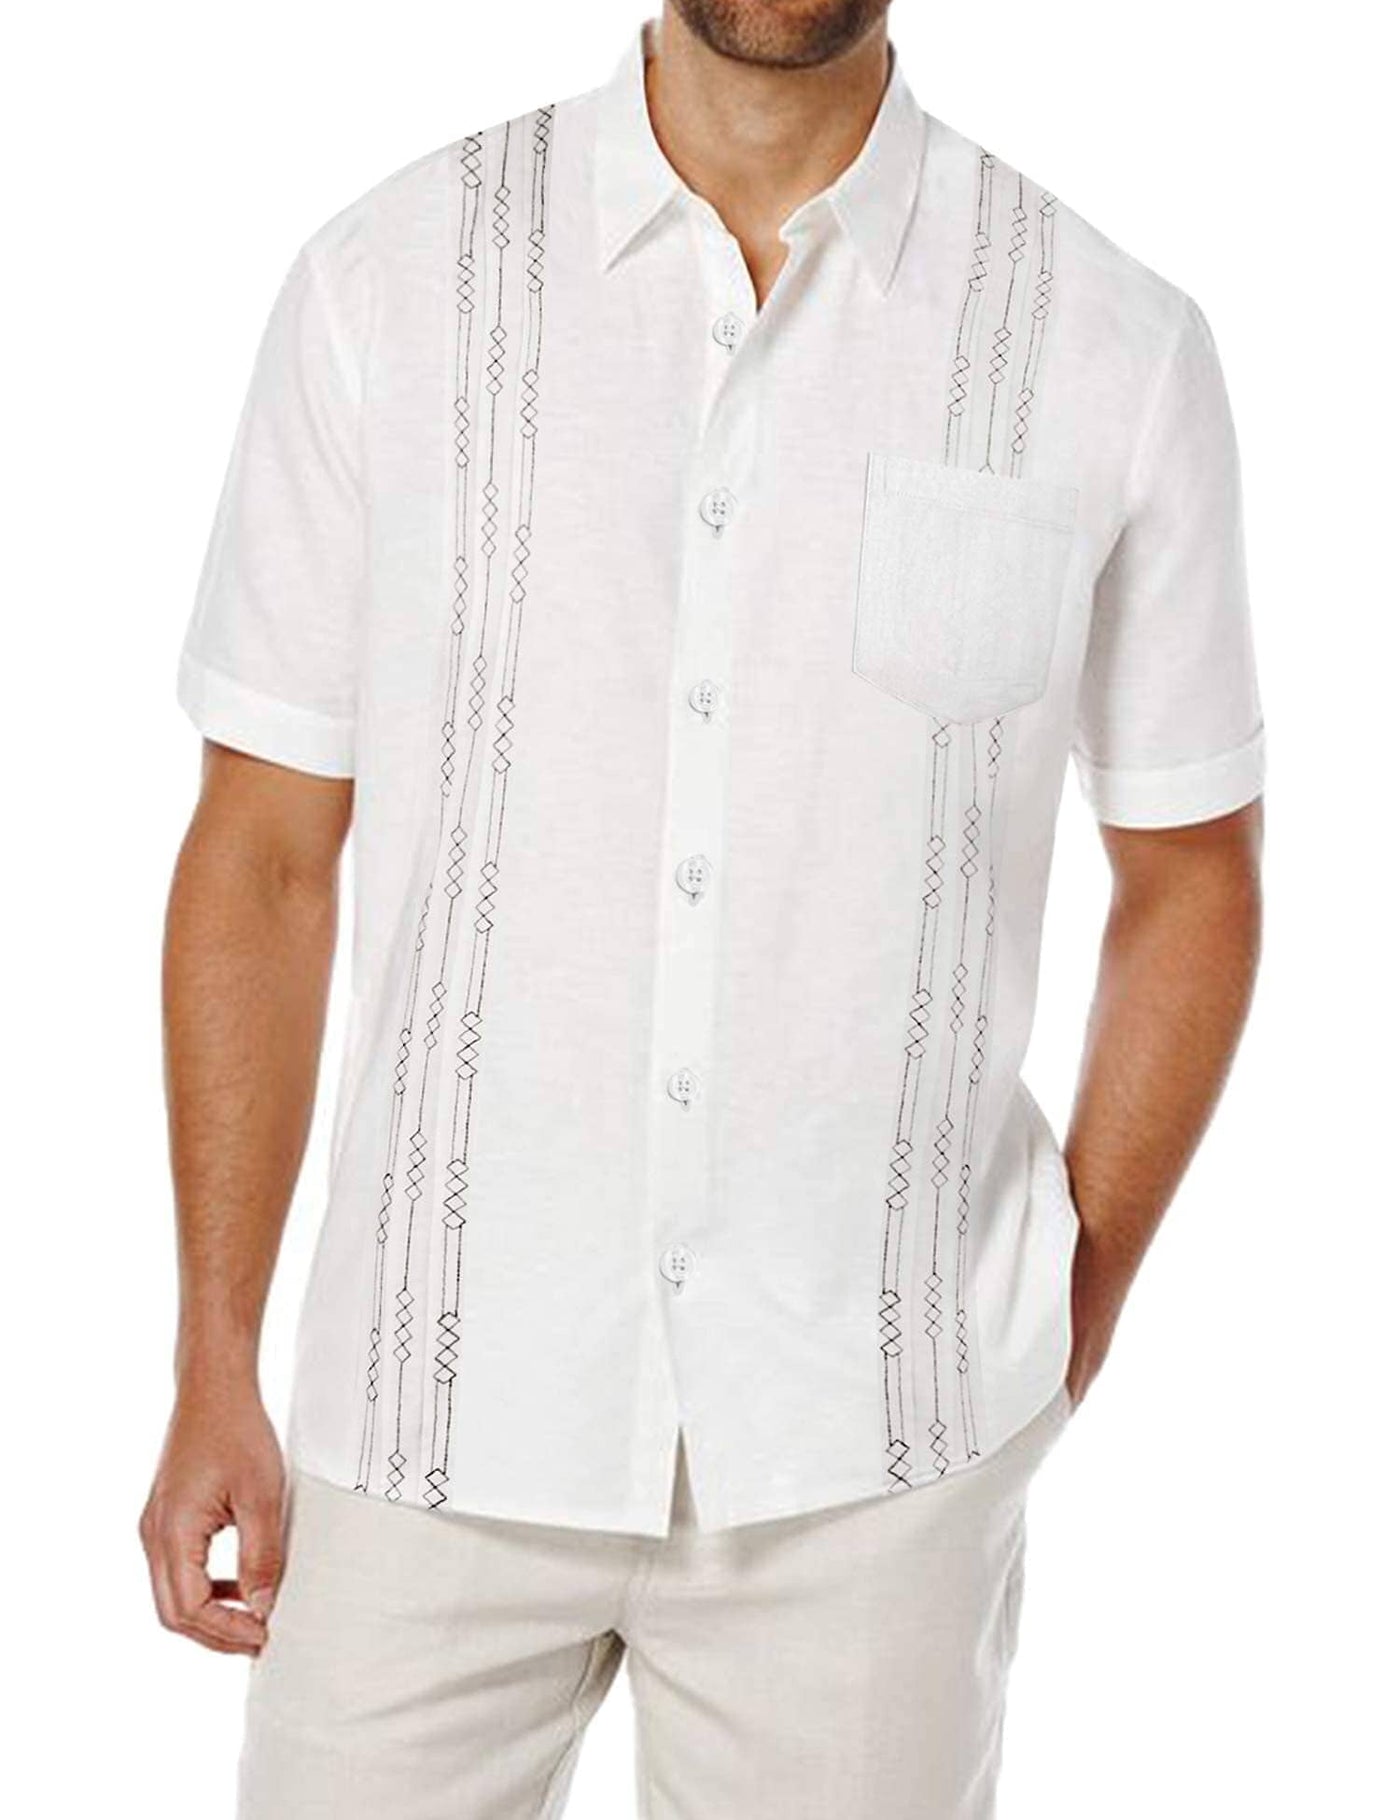 Coofandy Short Sleeve Shirts (US Only) Shirts coofandy 